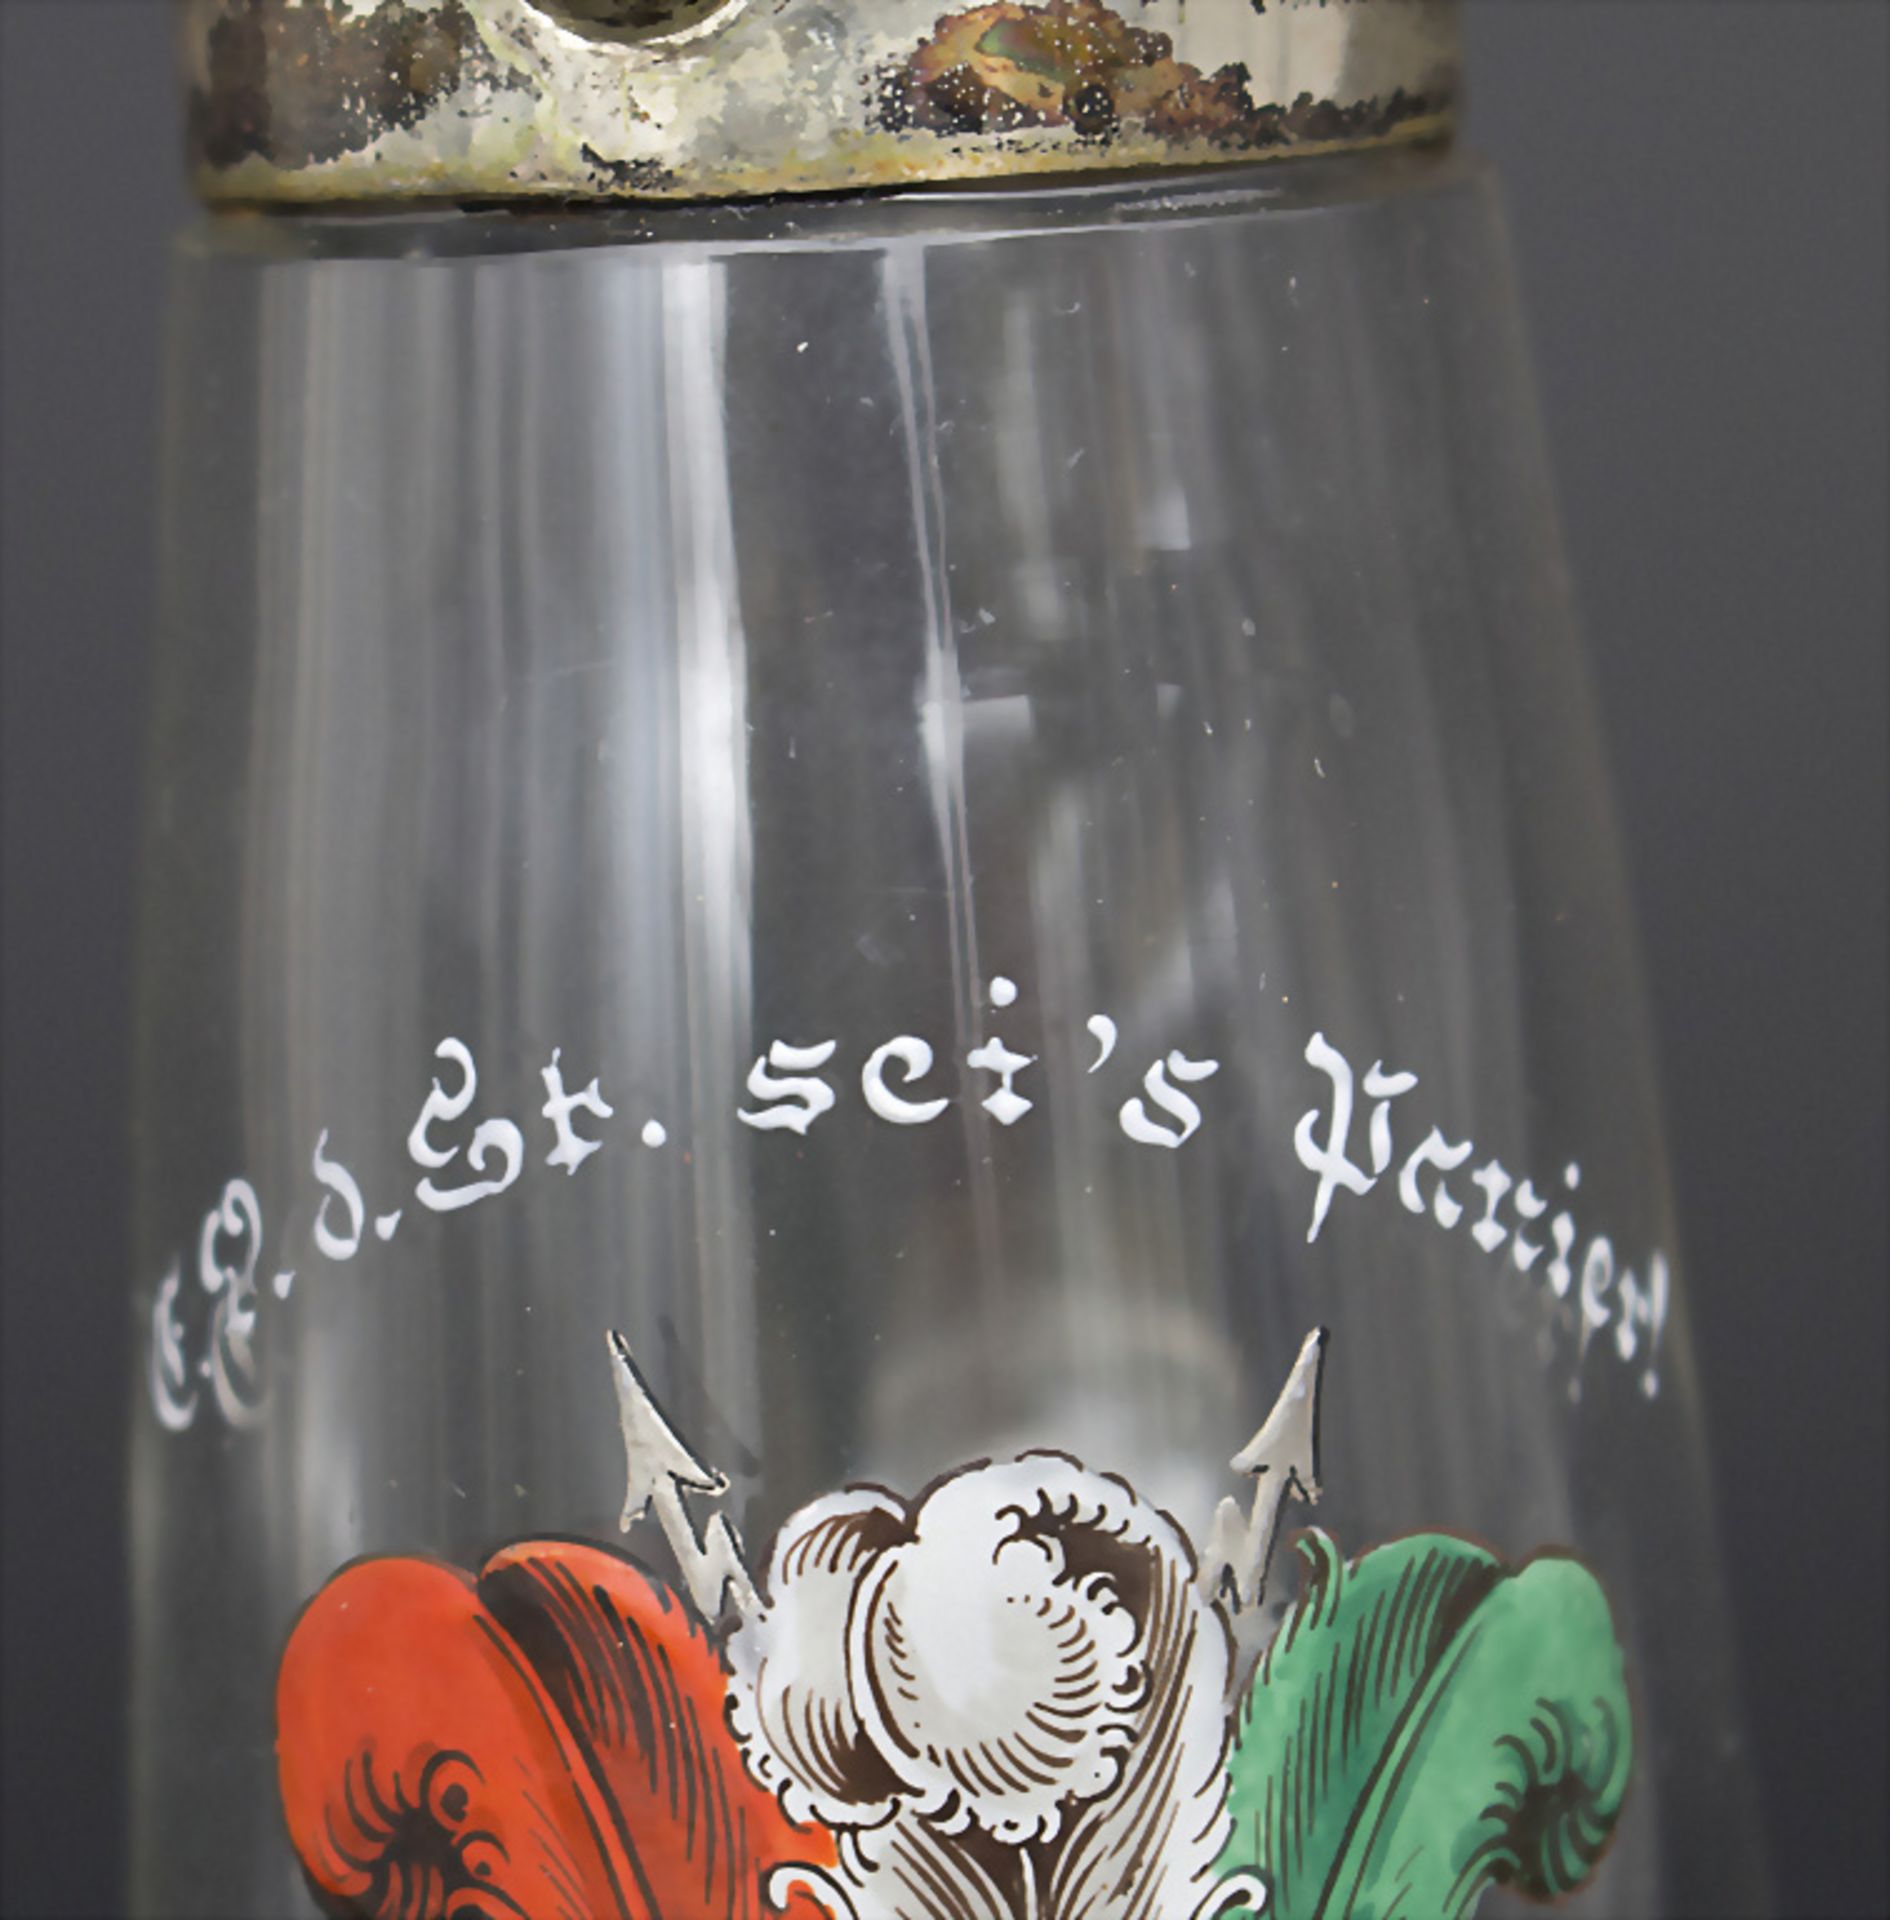 Burschenschaft-Schenkkrug / A fraternity glass jug, um 1903 - Image 5 of 9